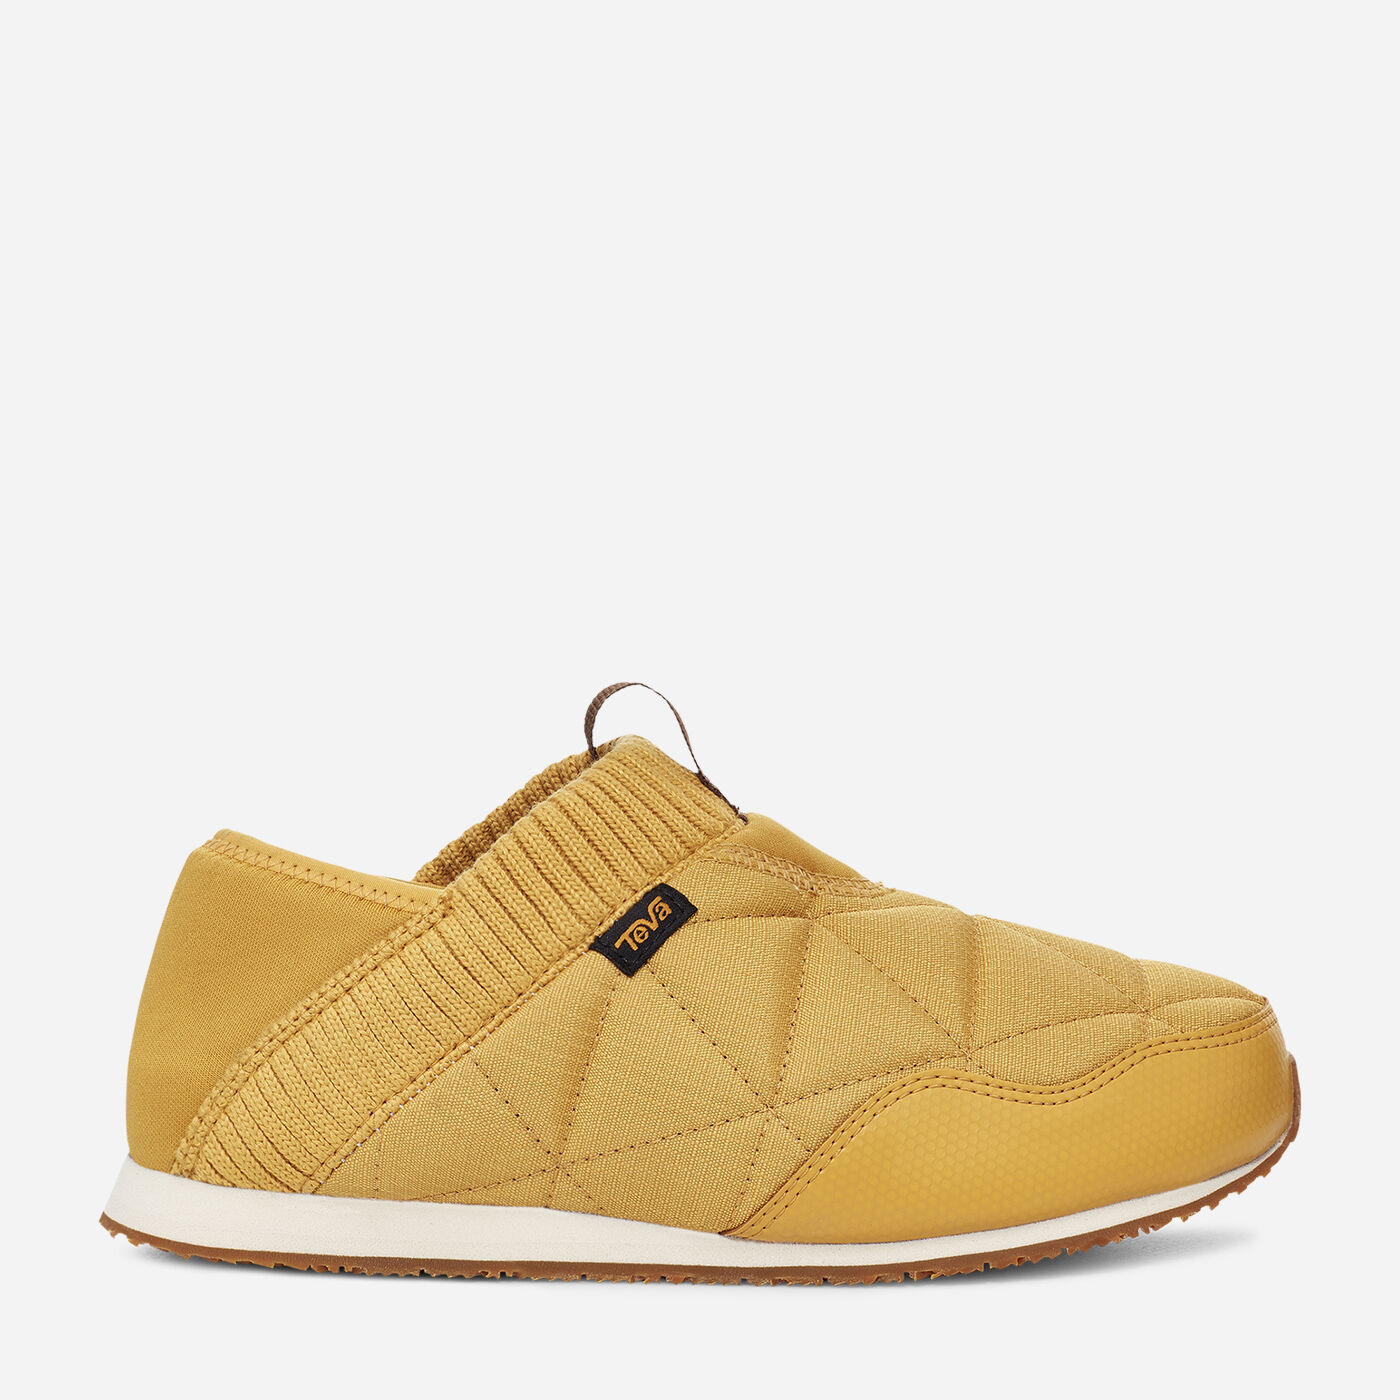 Women's TEVA ReEMBER Shoes in Honey Gold, Size 4